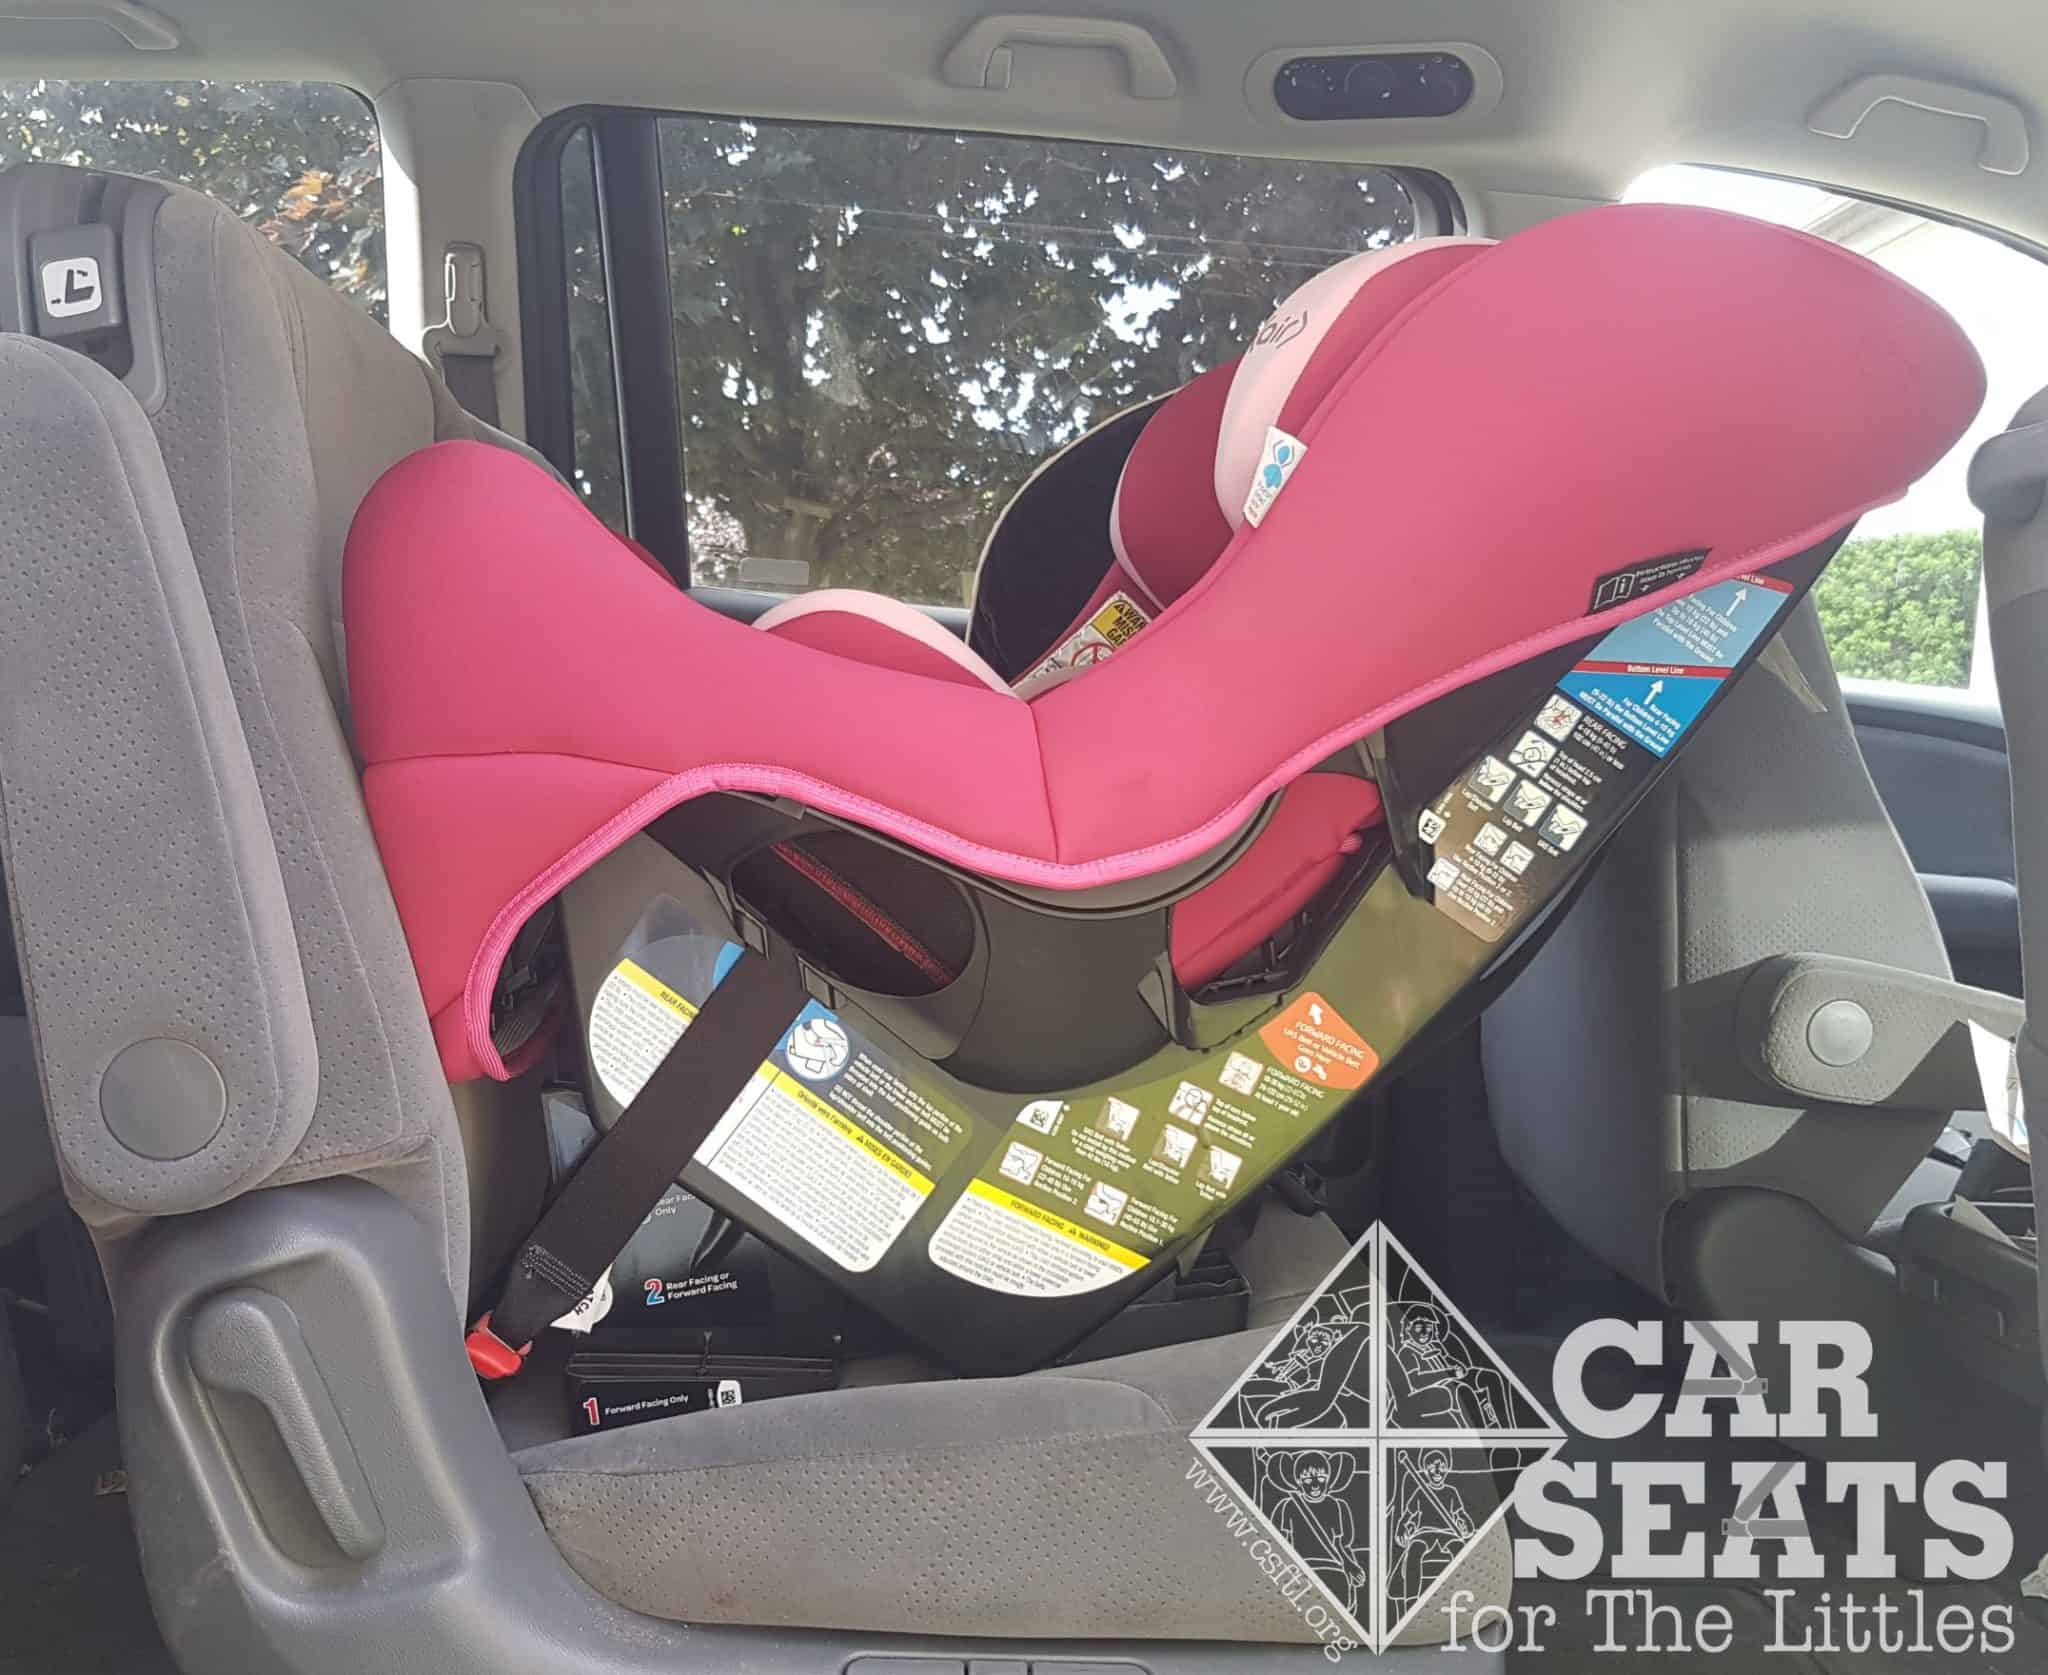 fitting maxi cosi car seat with seatbelt